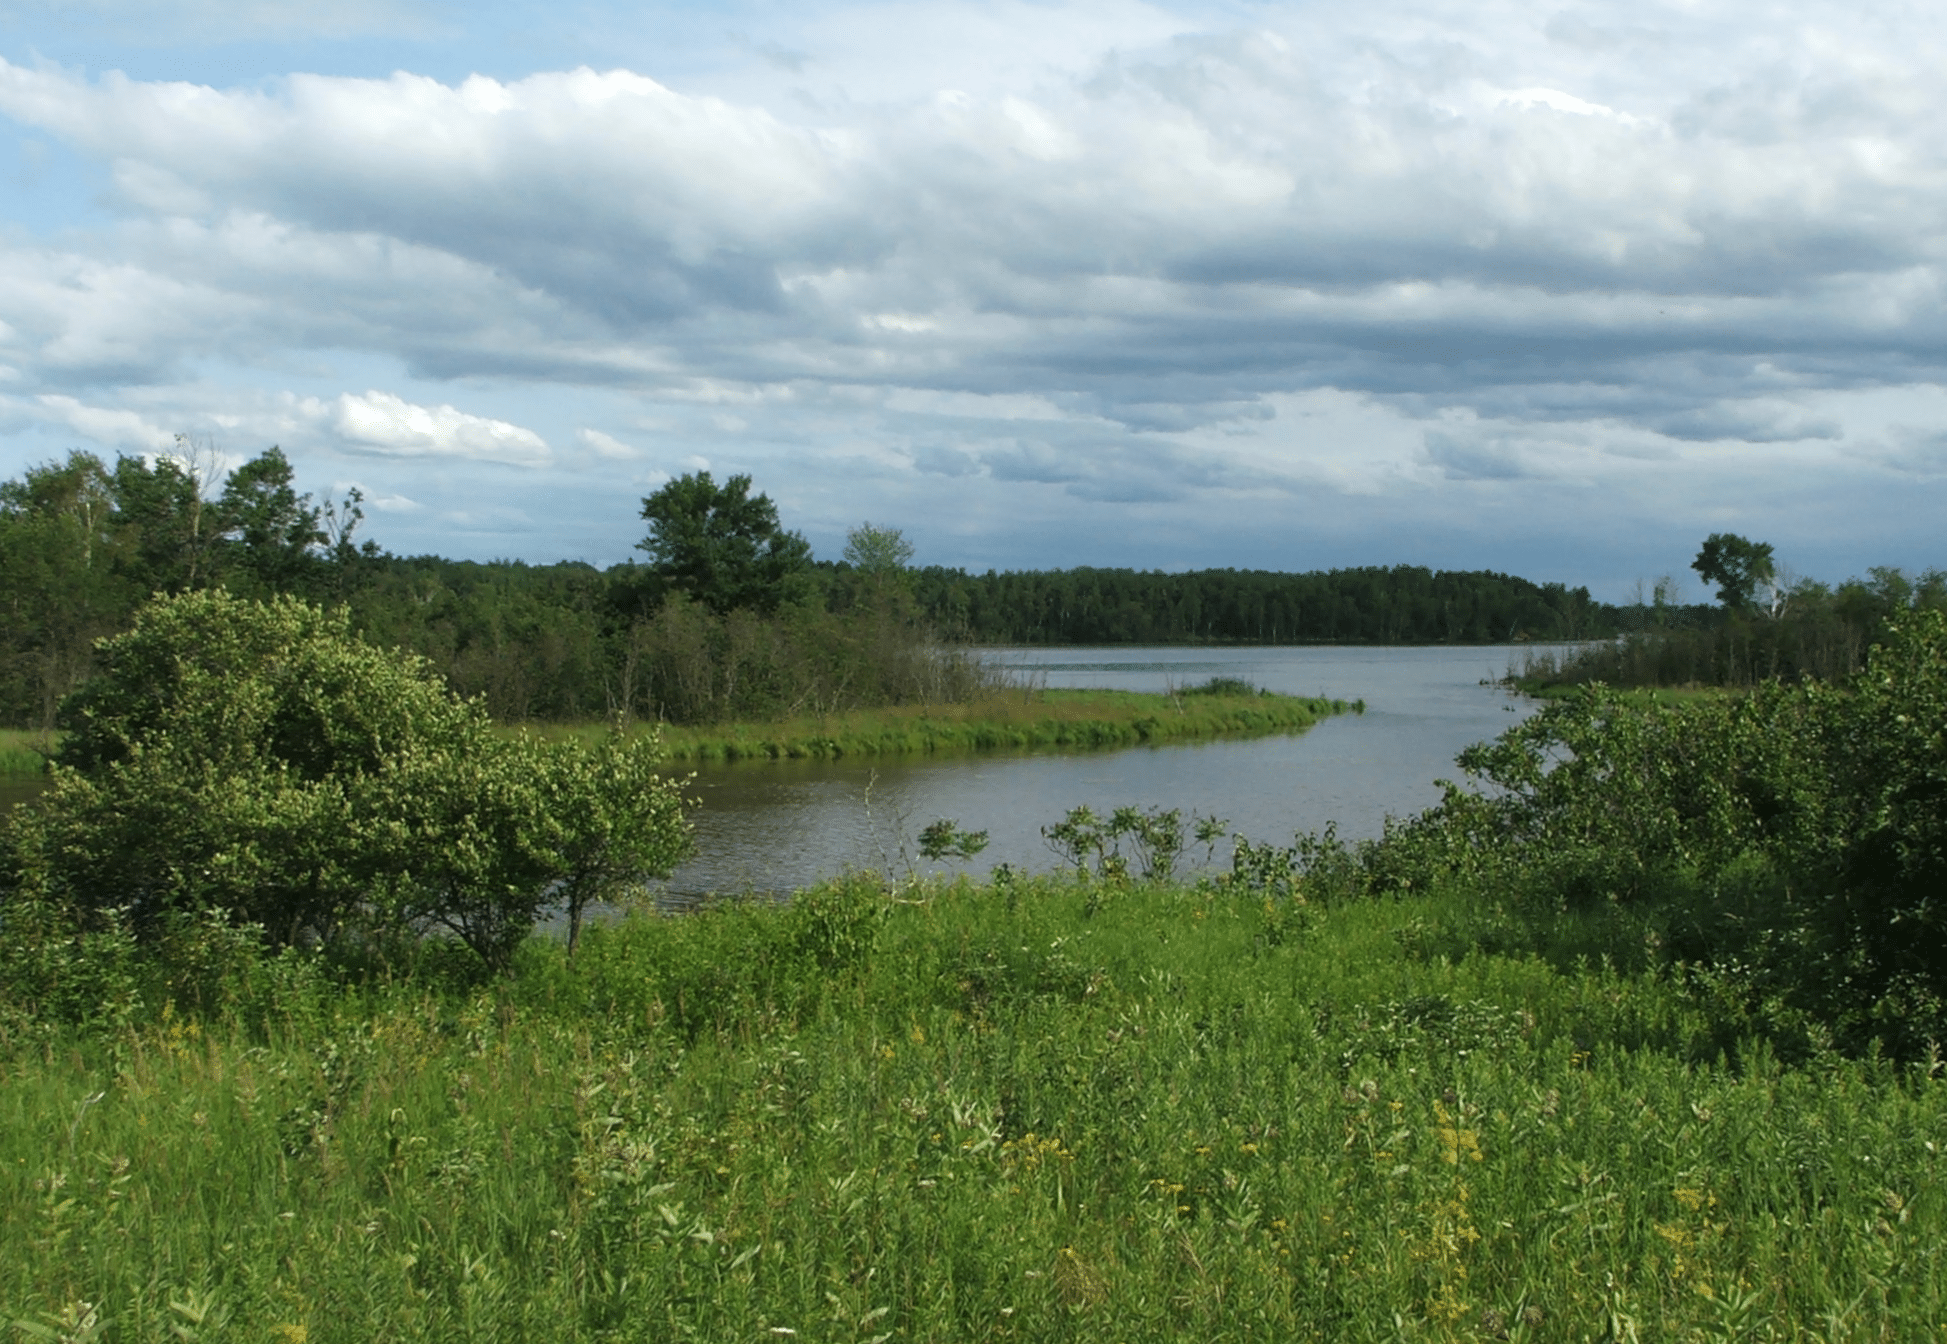 St. Louis River at proposed park site